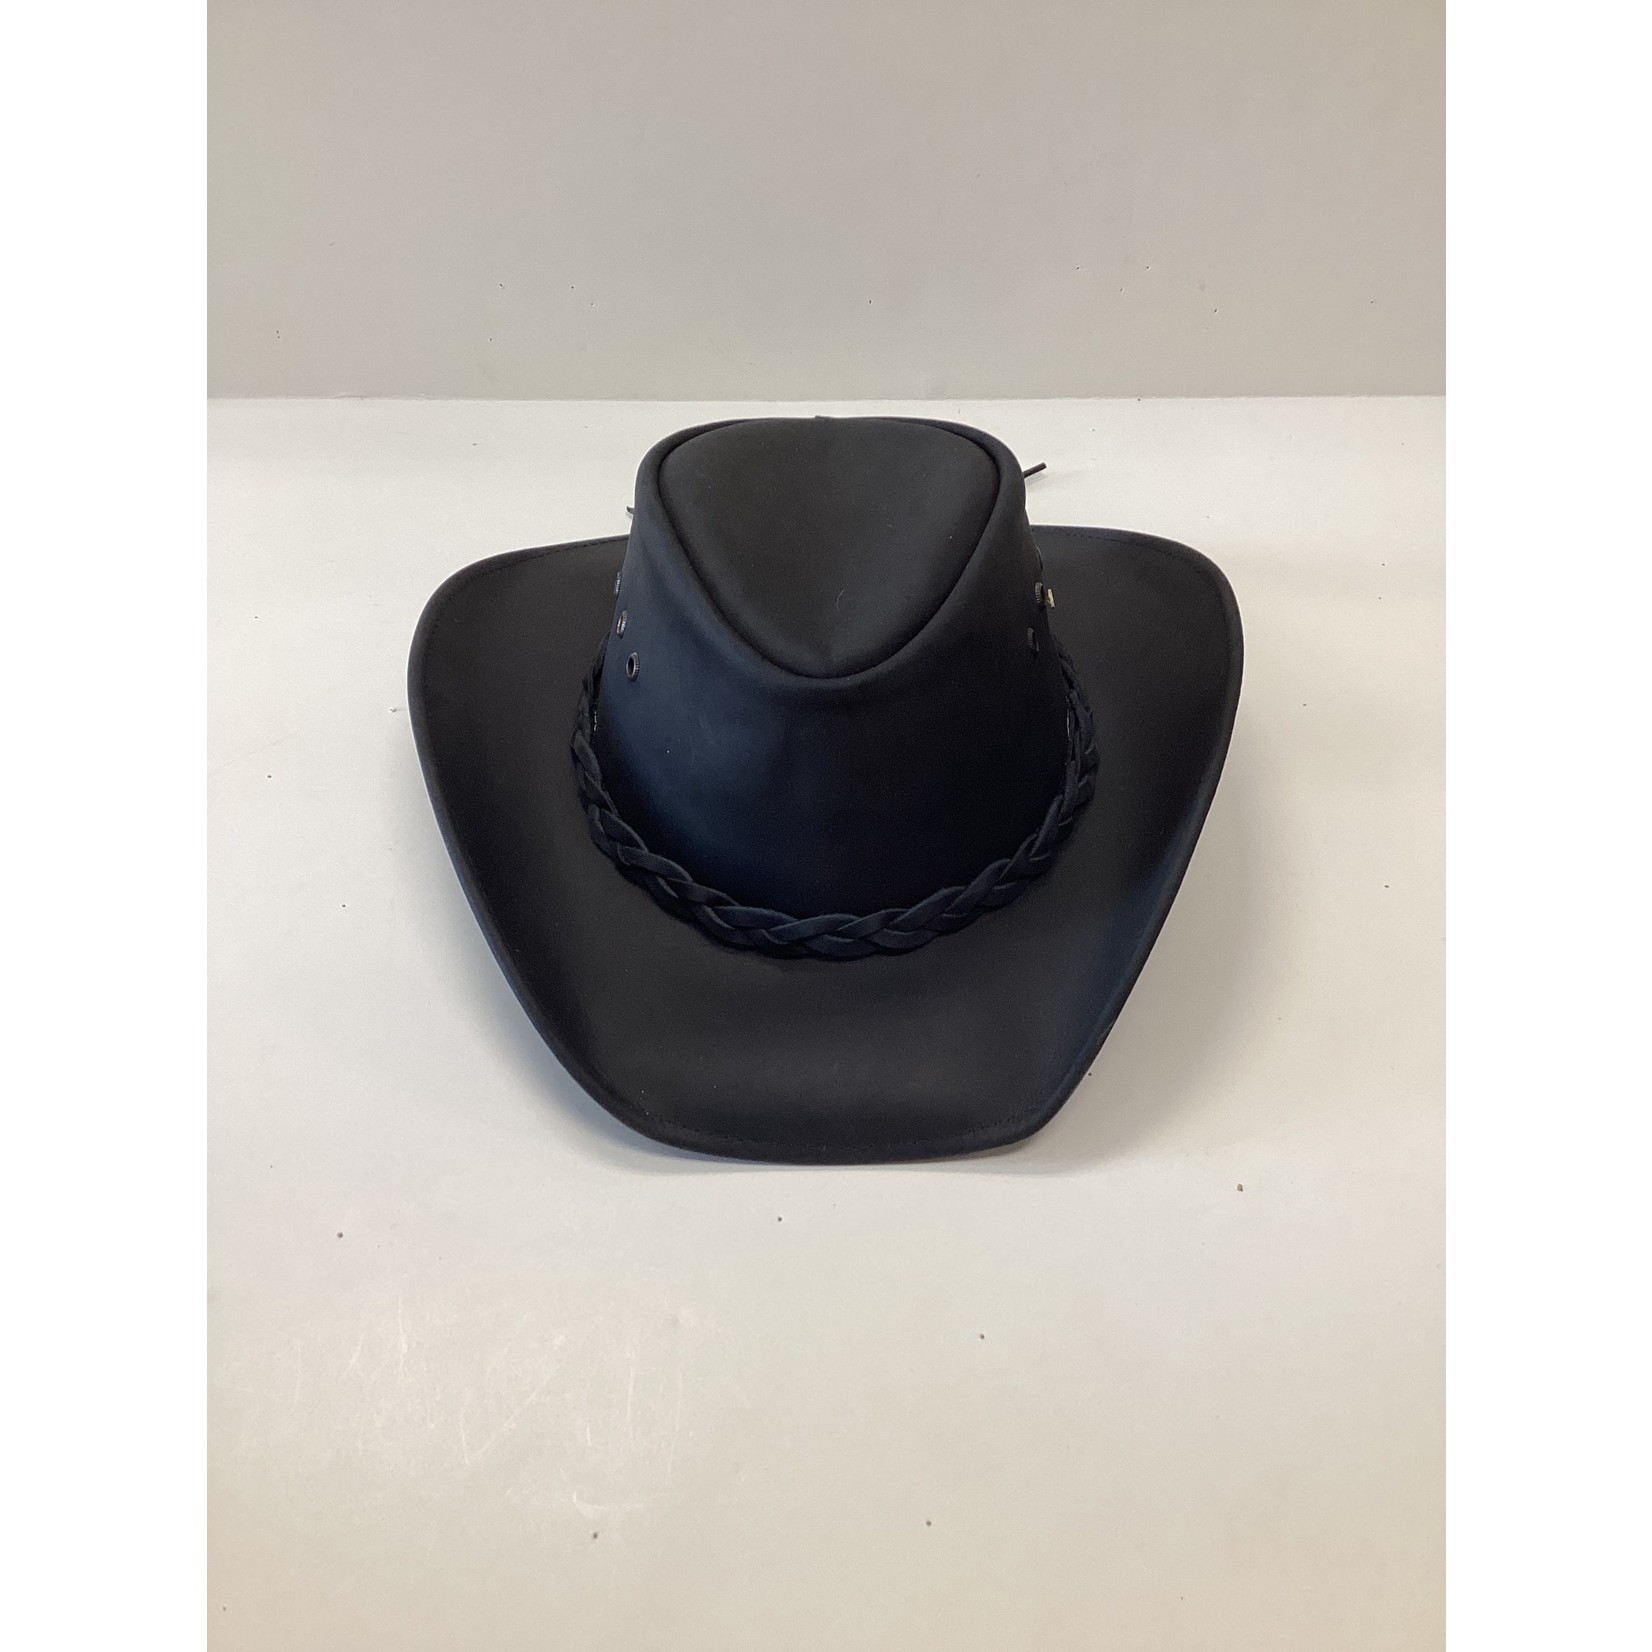 Modestone Leather Cowboy Hat